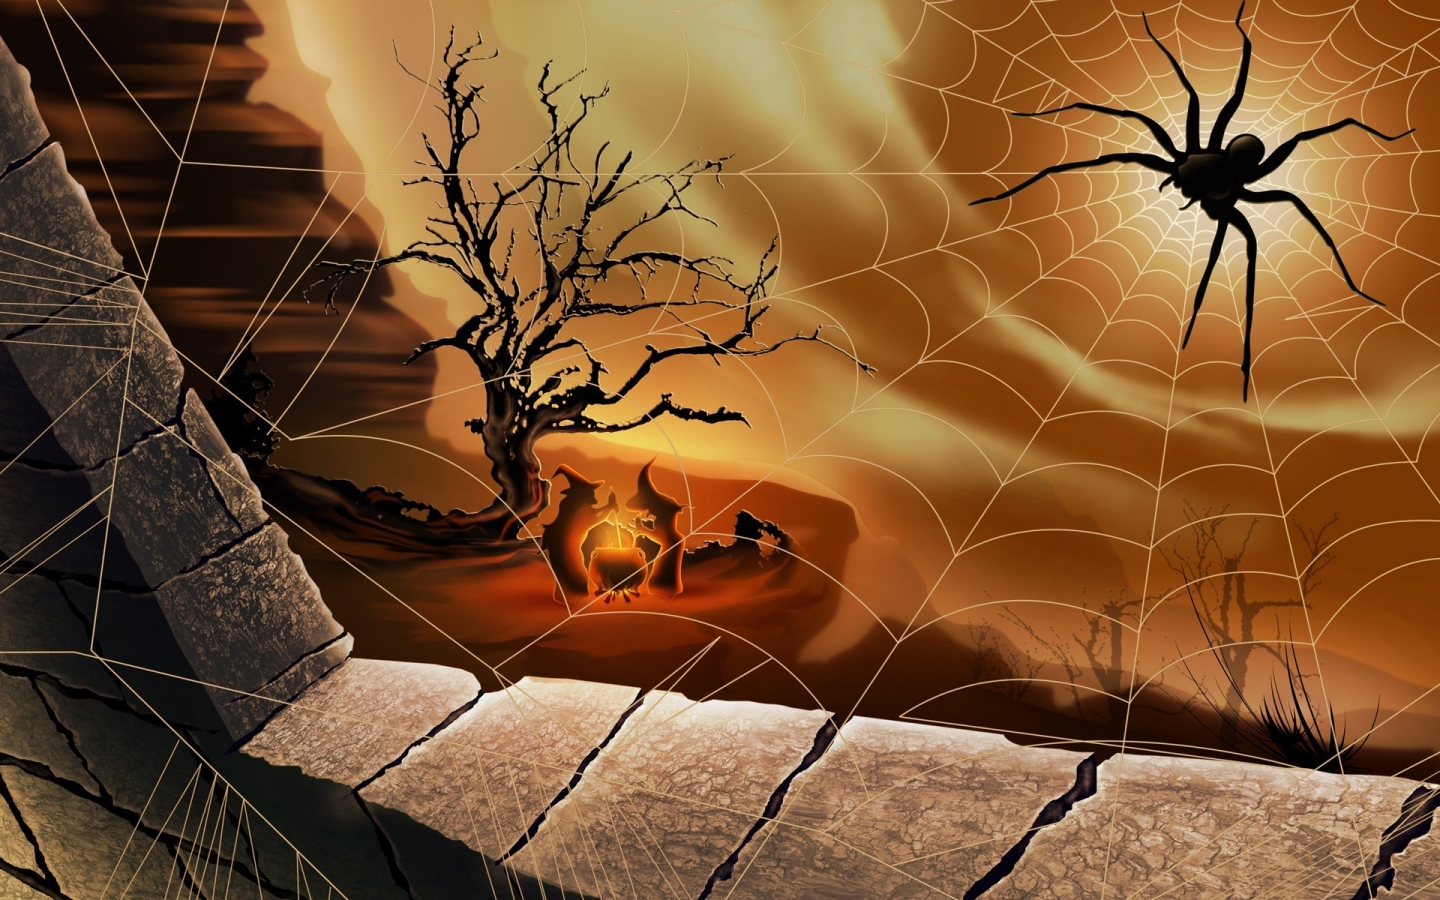 Halloween Spider for 1440 x 900 widescreen resolution